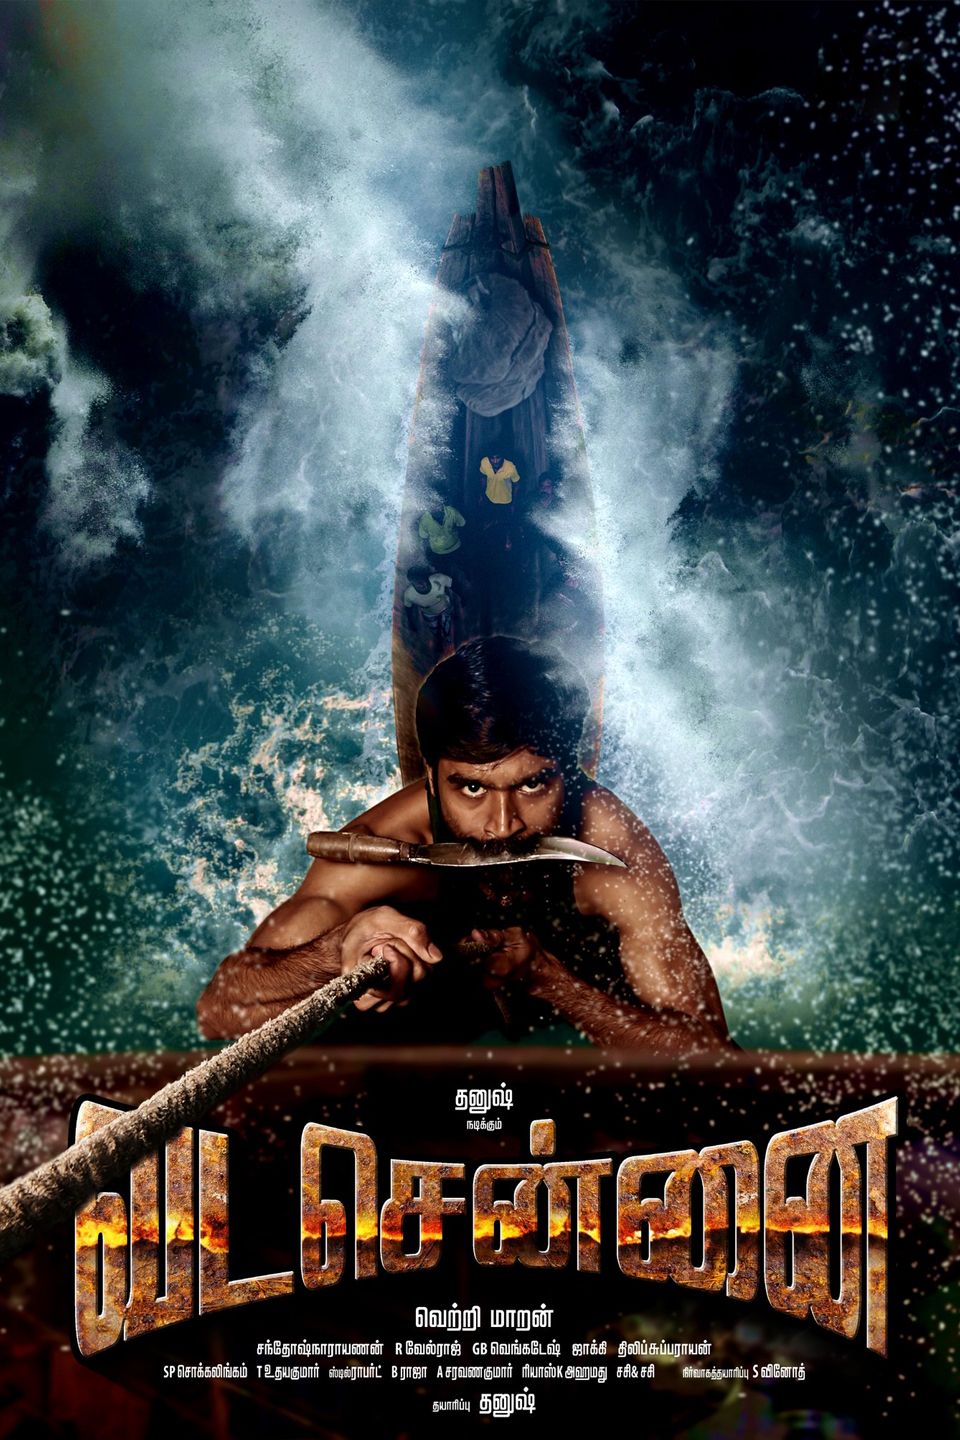 Chennai Central (Vada Chennai) (2020) Hindi Dubbed ORG HDRip Full Movie 720p 480p